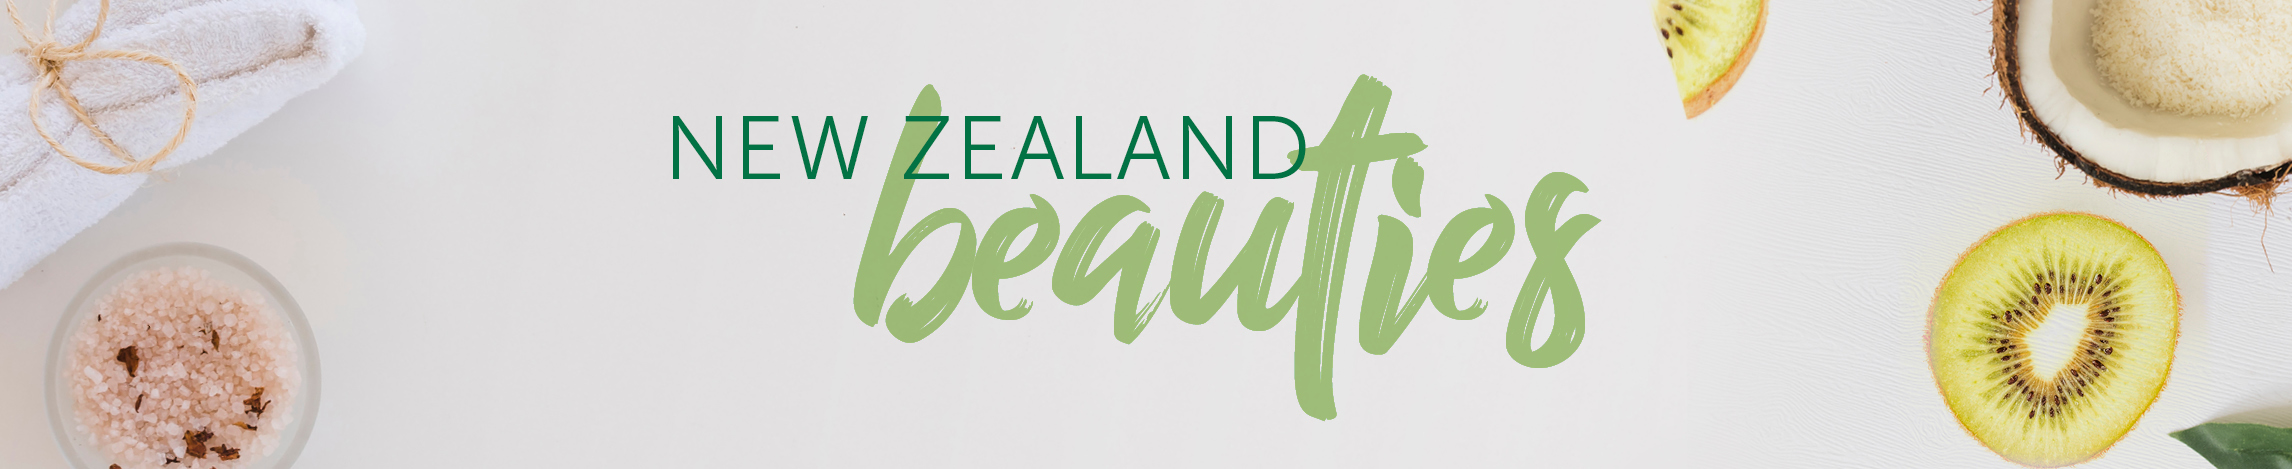 03955 - NZ Beauties giveaway - social03955 - NZ Beauties giveaway -landing page banner.jpg